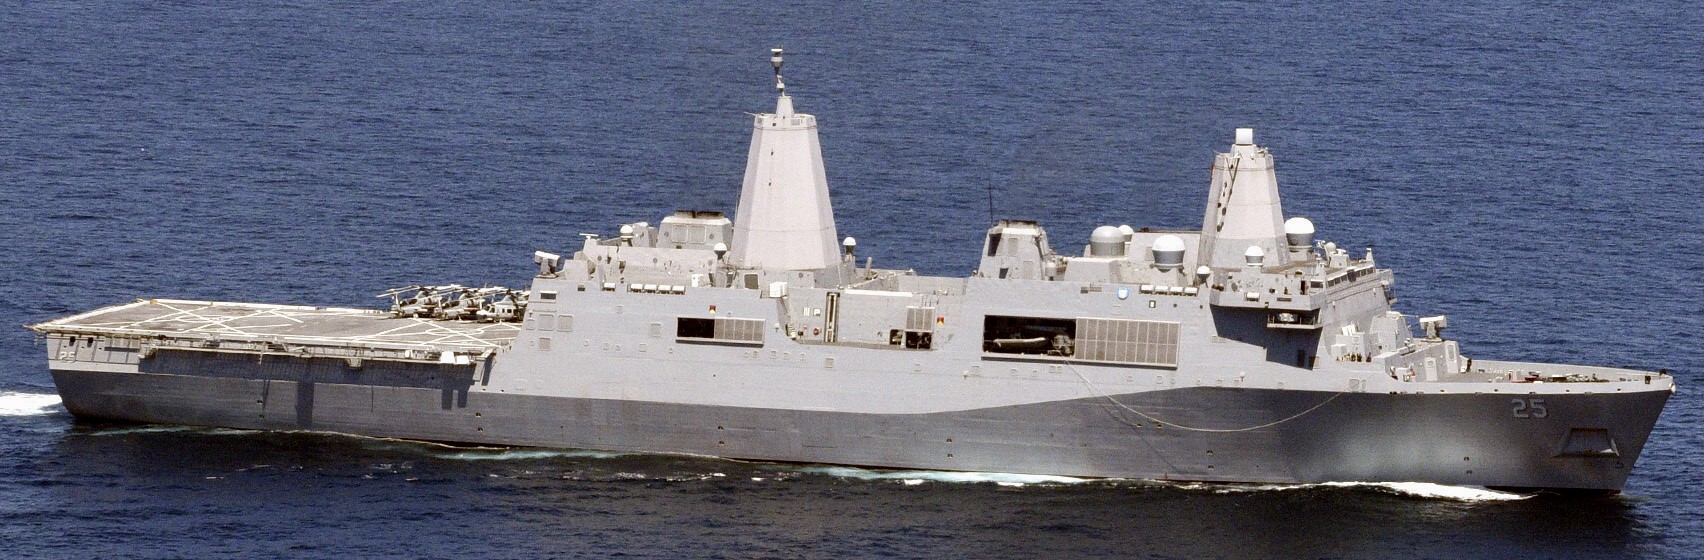 lpd-25 uss somerset san antonio class amphibious transport dock landing ship us navy 56